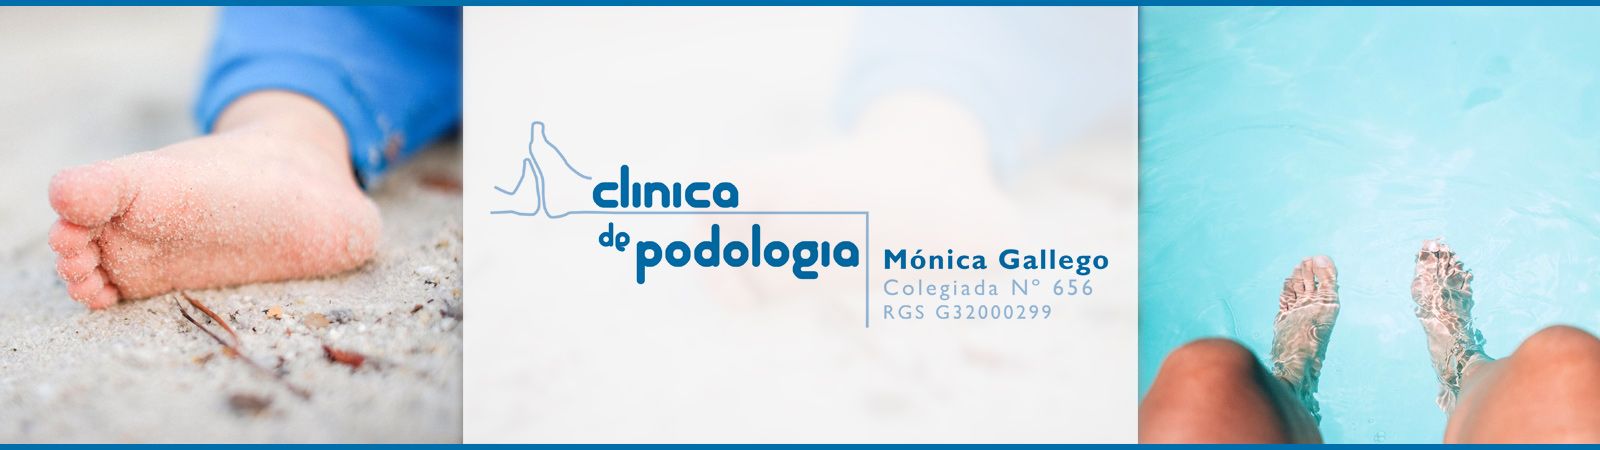 Podóloga Mónica Gallego Rodríguez banner 2